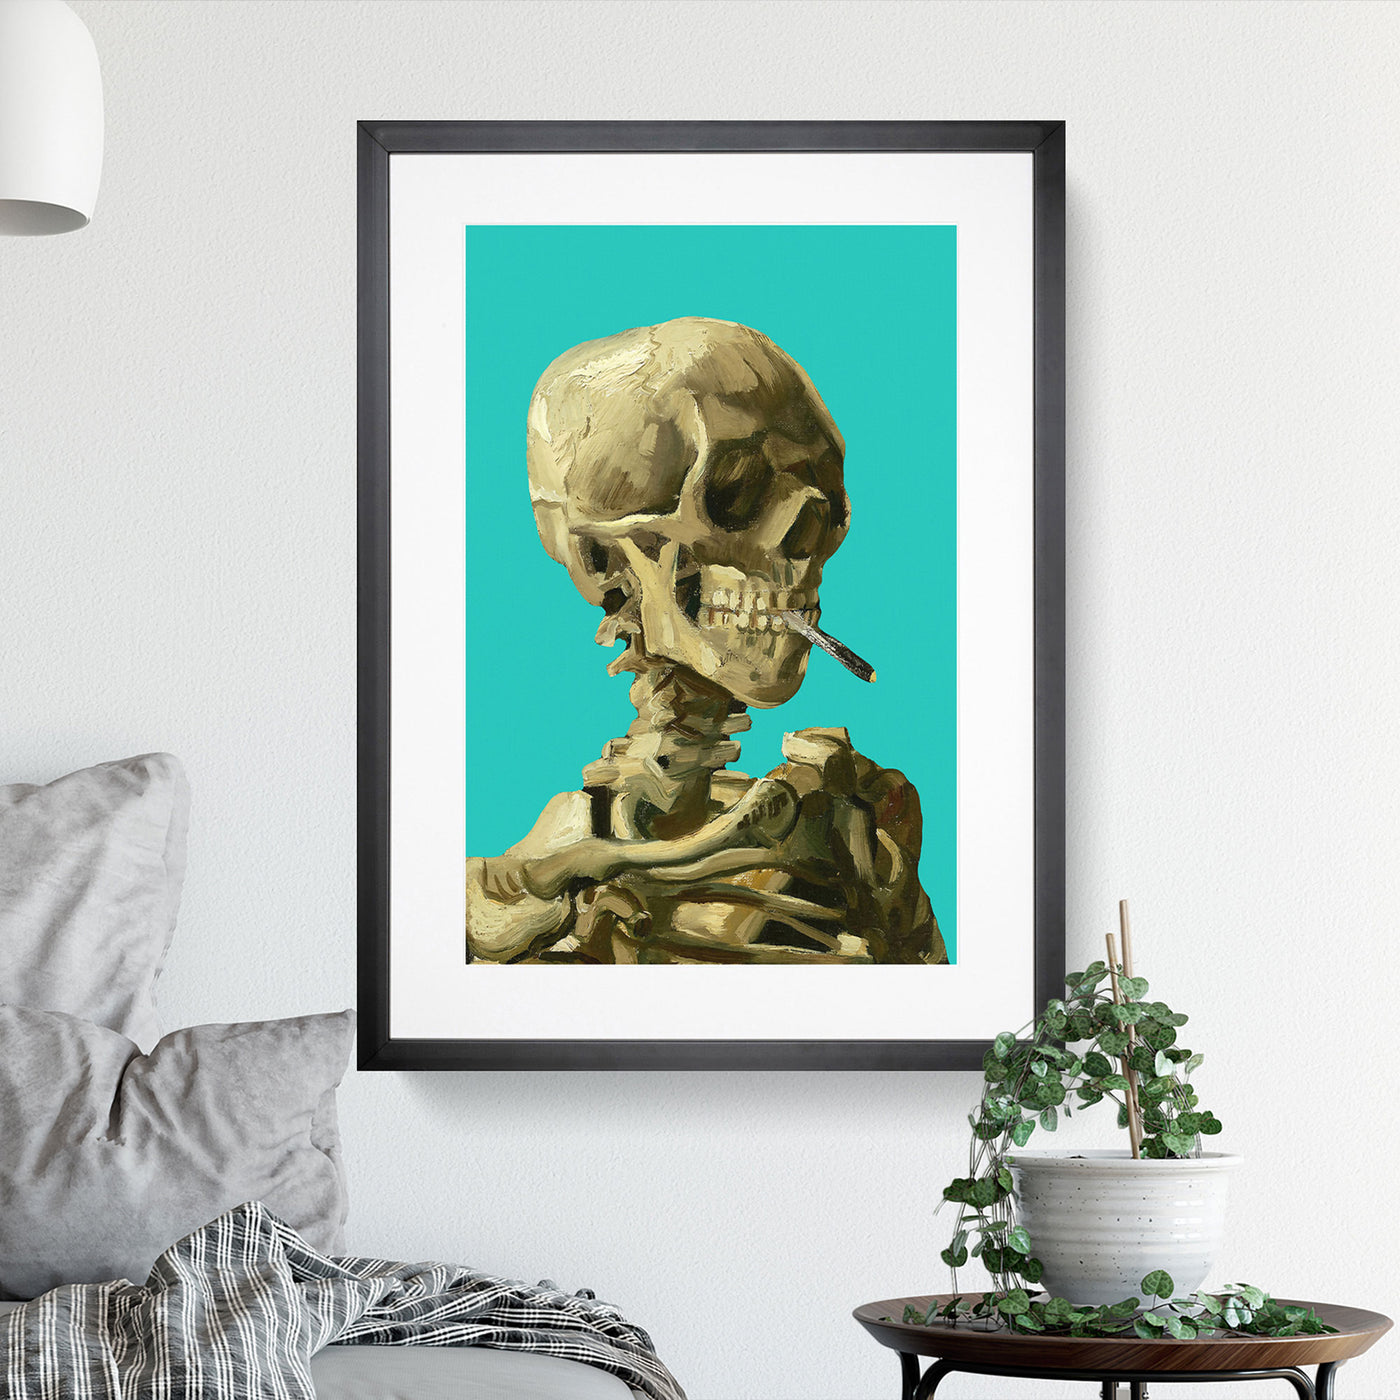 Teal Skull of a Skeleton with Cigarette By Vincent Van Gogh